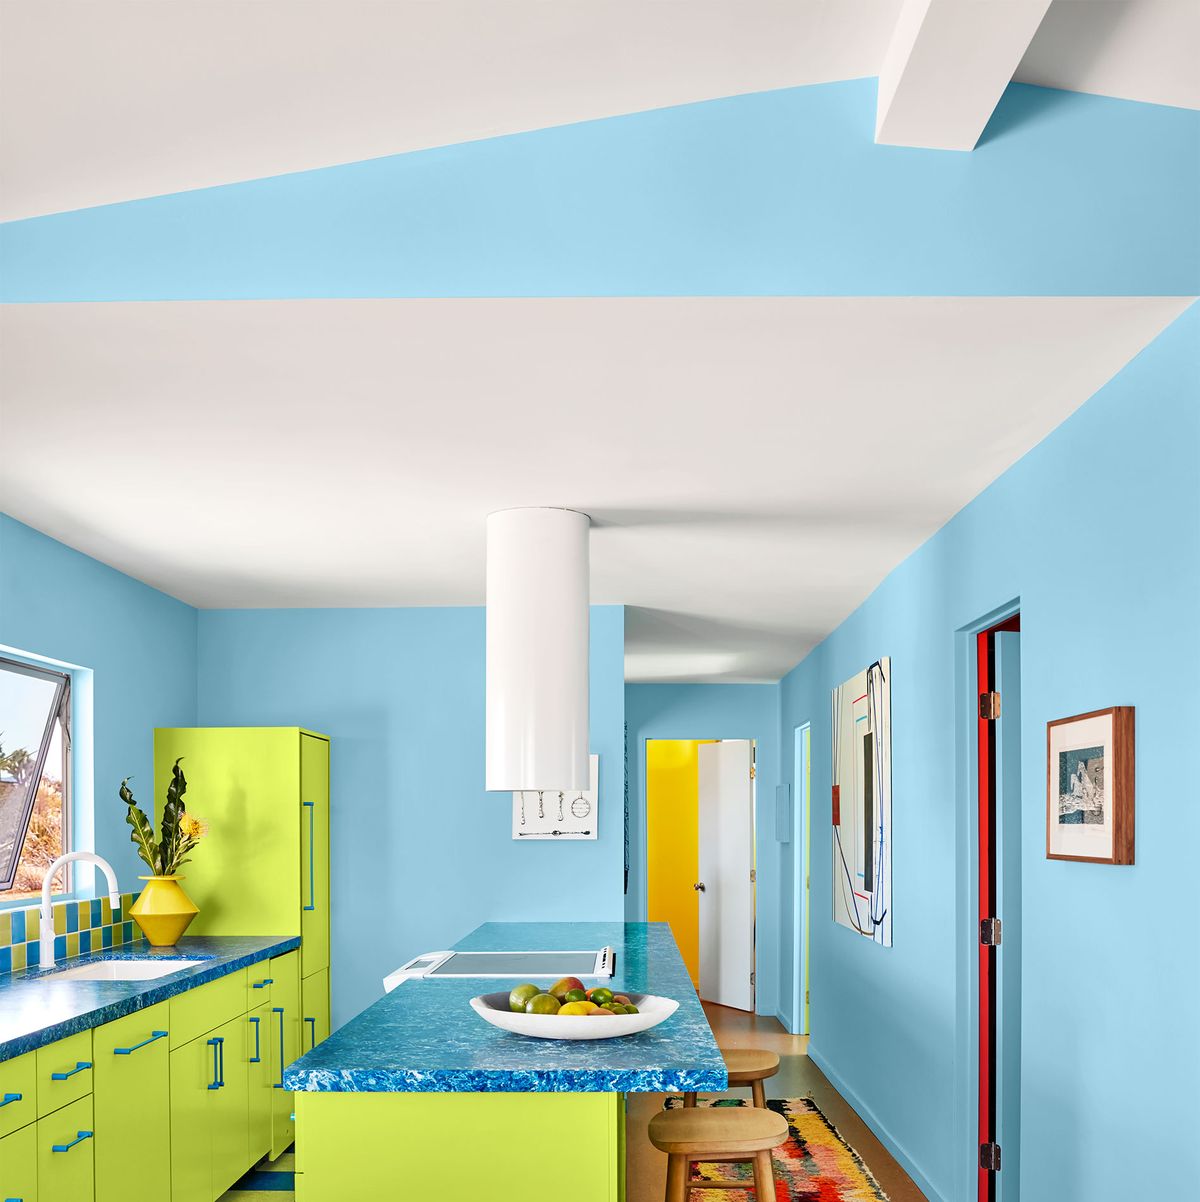 6 Budget-Friendly Kitchen Flooring Ideas You Can DIY